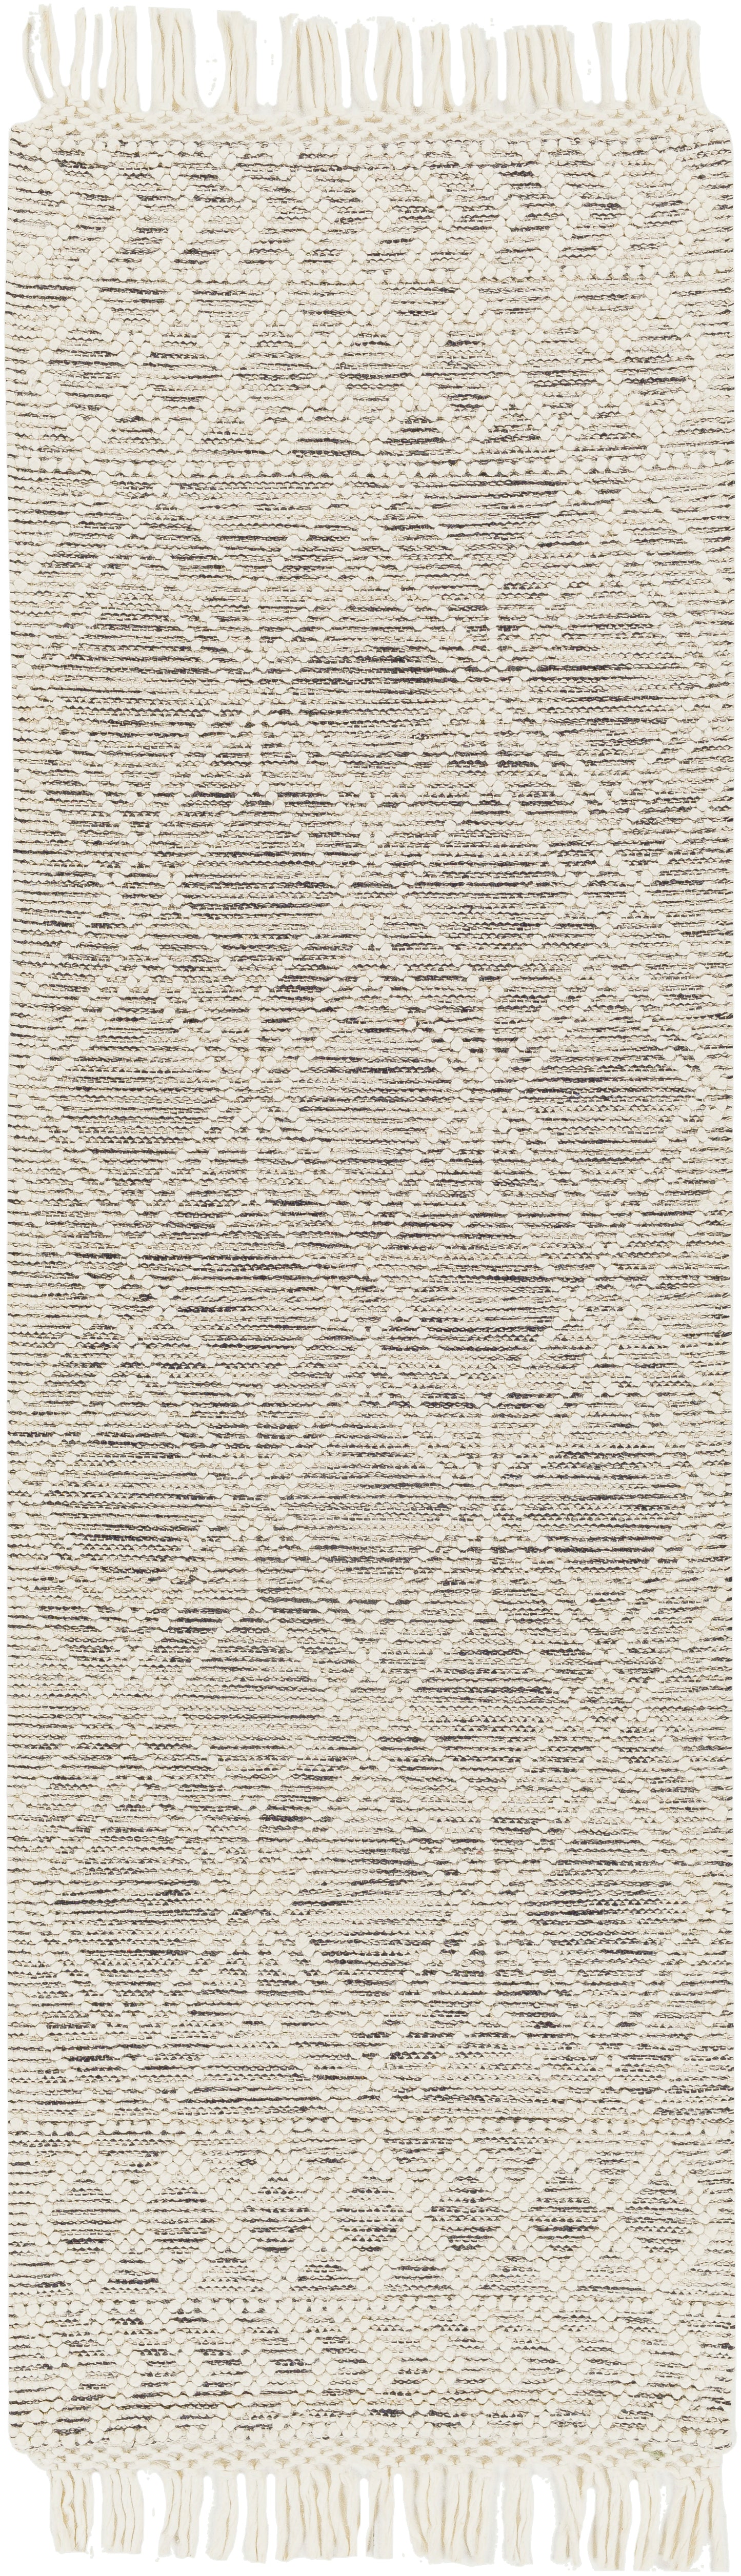 Hemingway 30194 Hand Woven Wool Indoor Area Rug by Surya Rugs